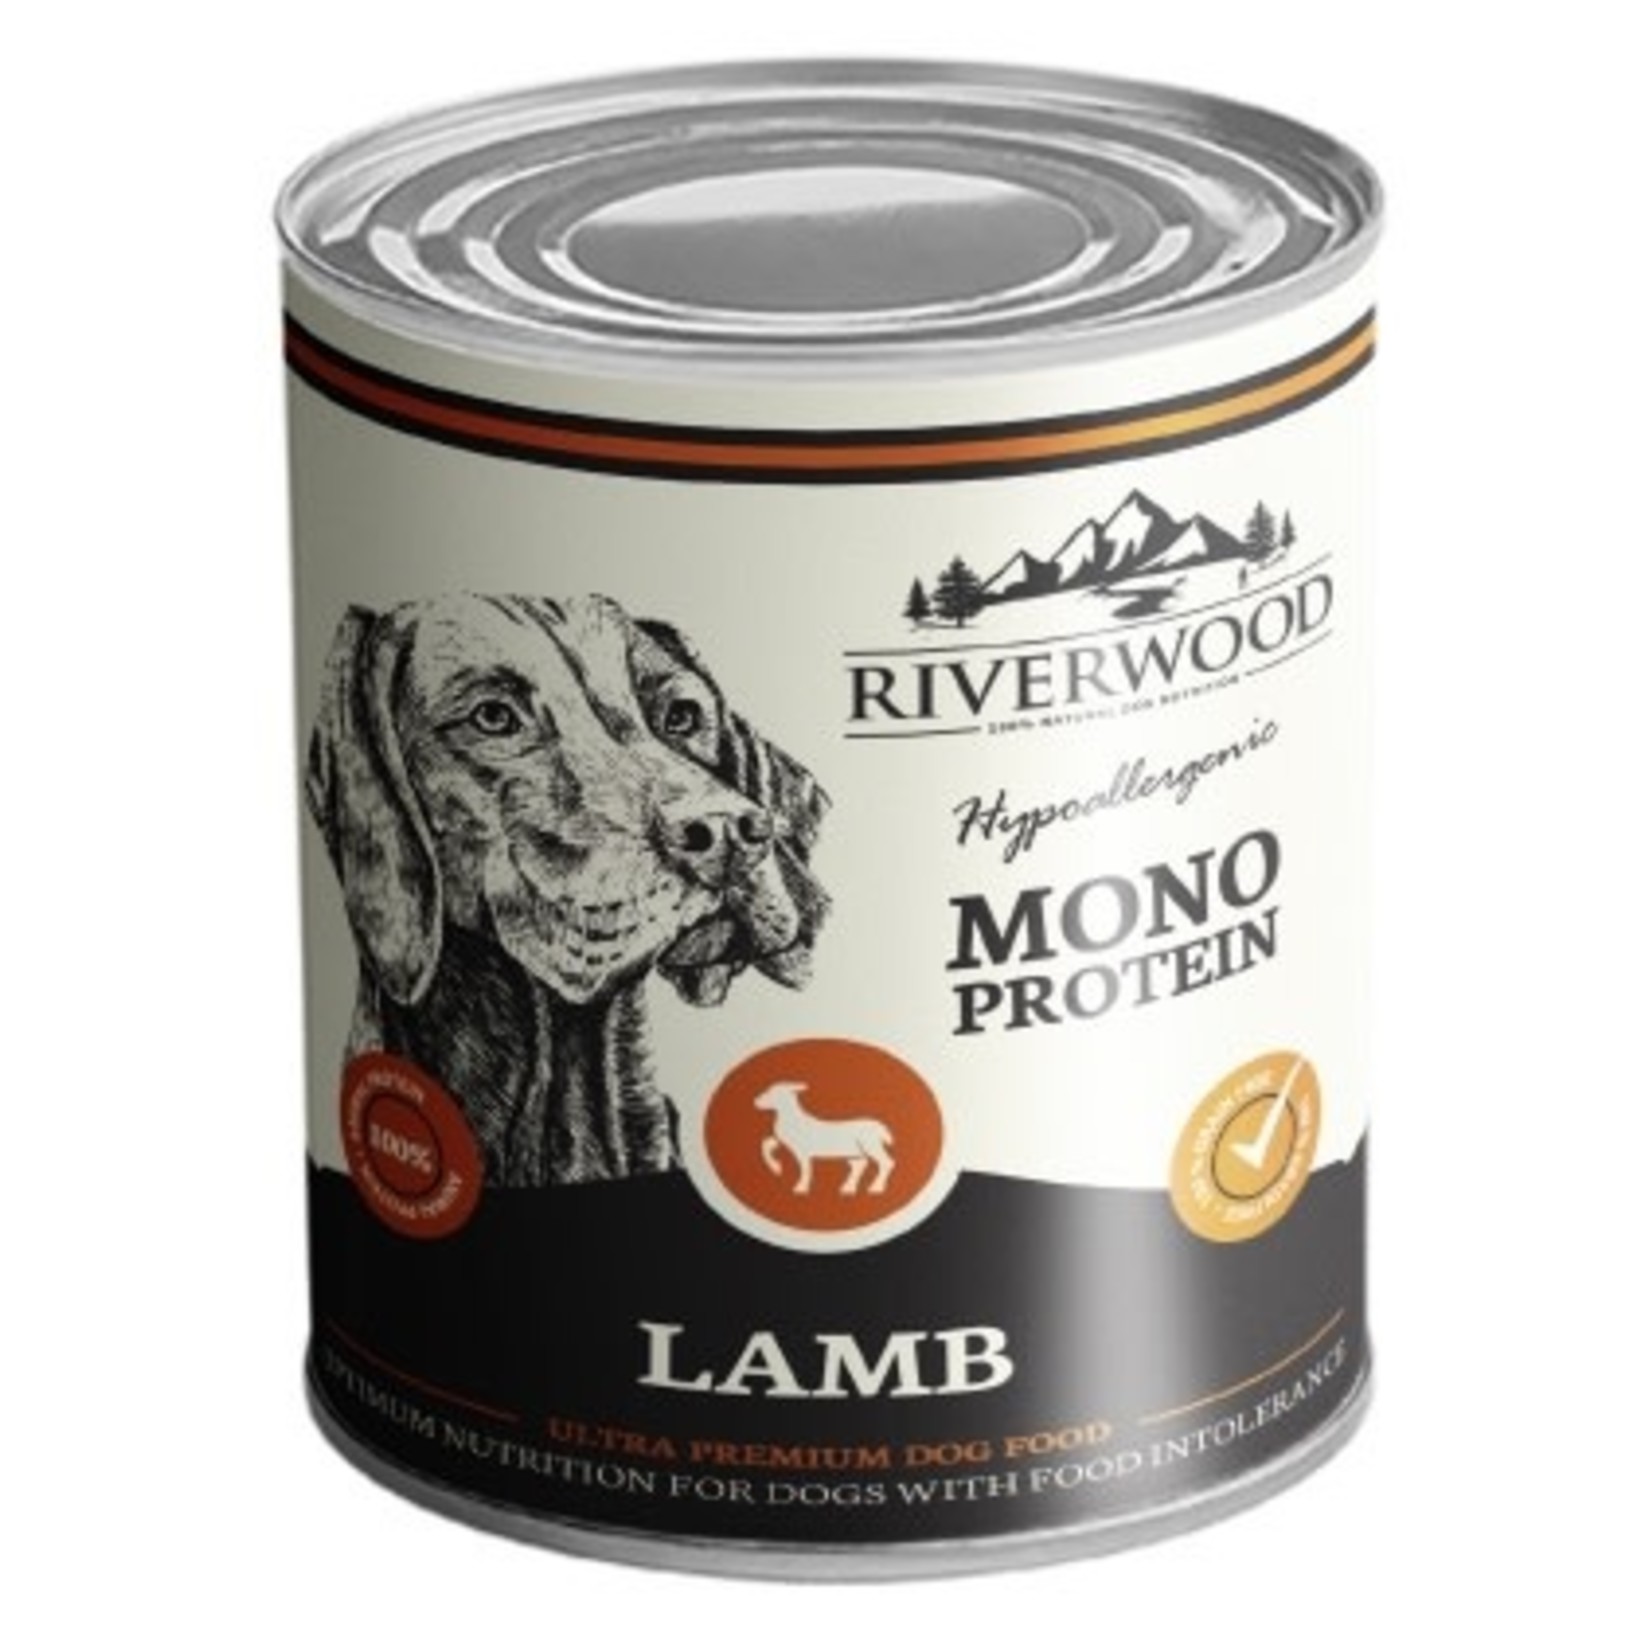 Riverwood Mono Proteine Lam 400 gr